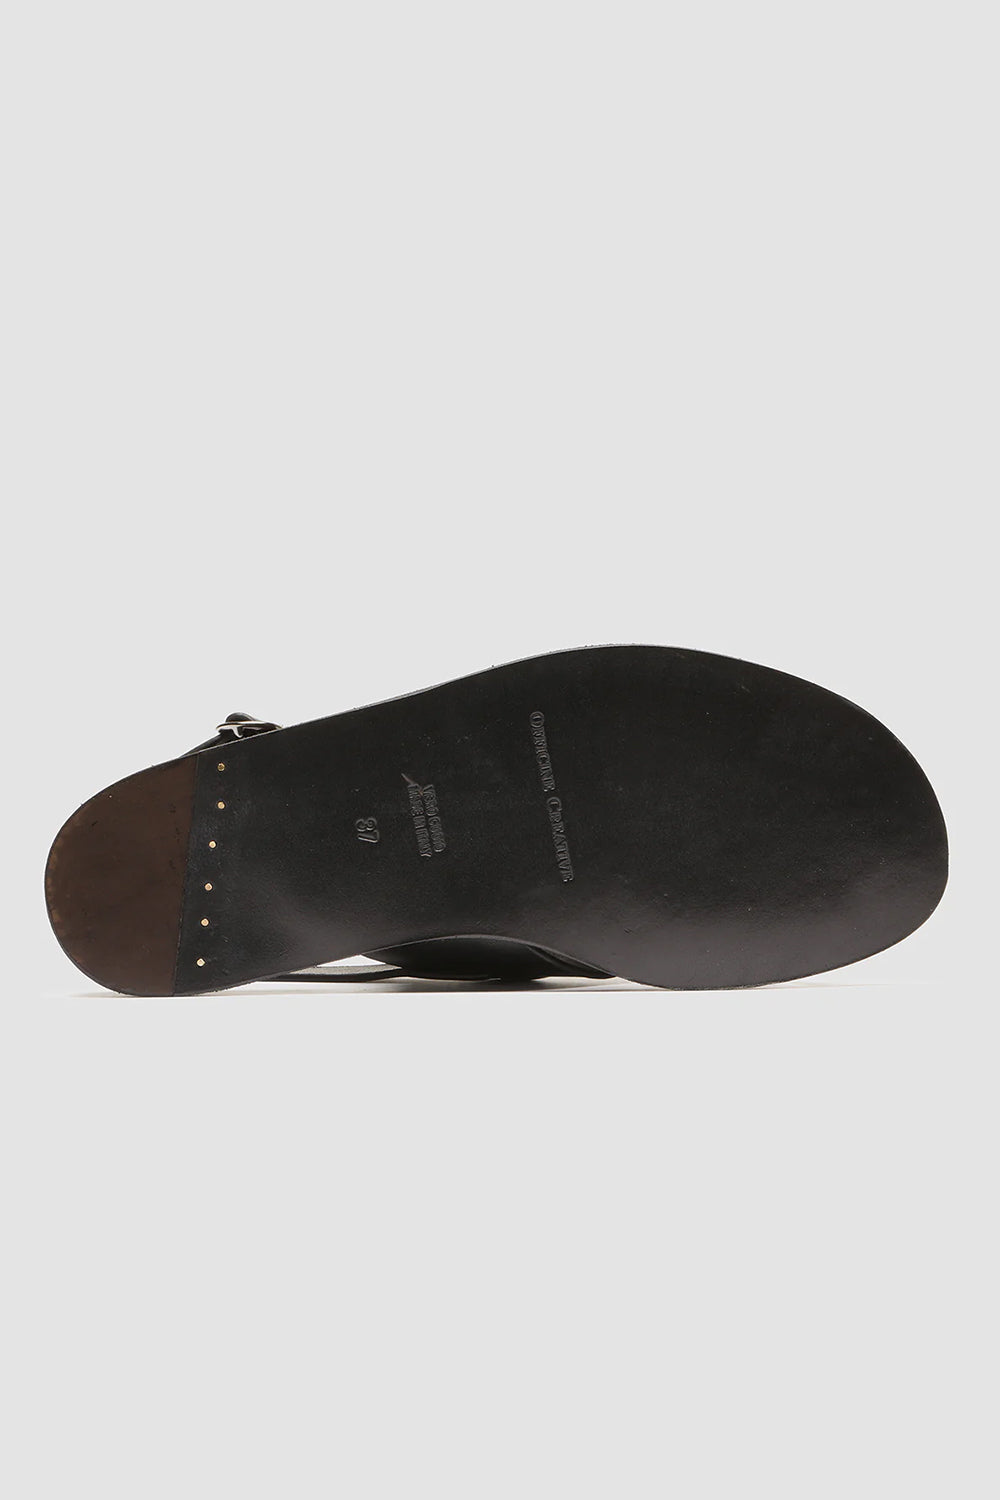 Officine Creative Contraire Sandals In Nappah Nero